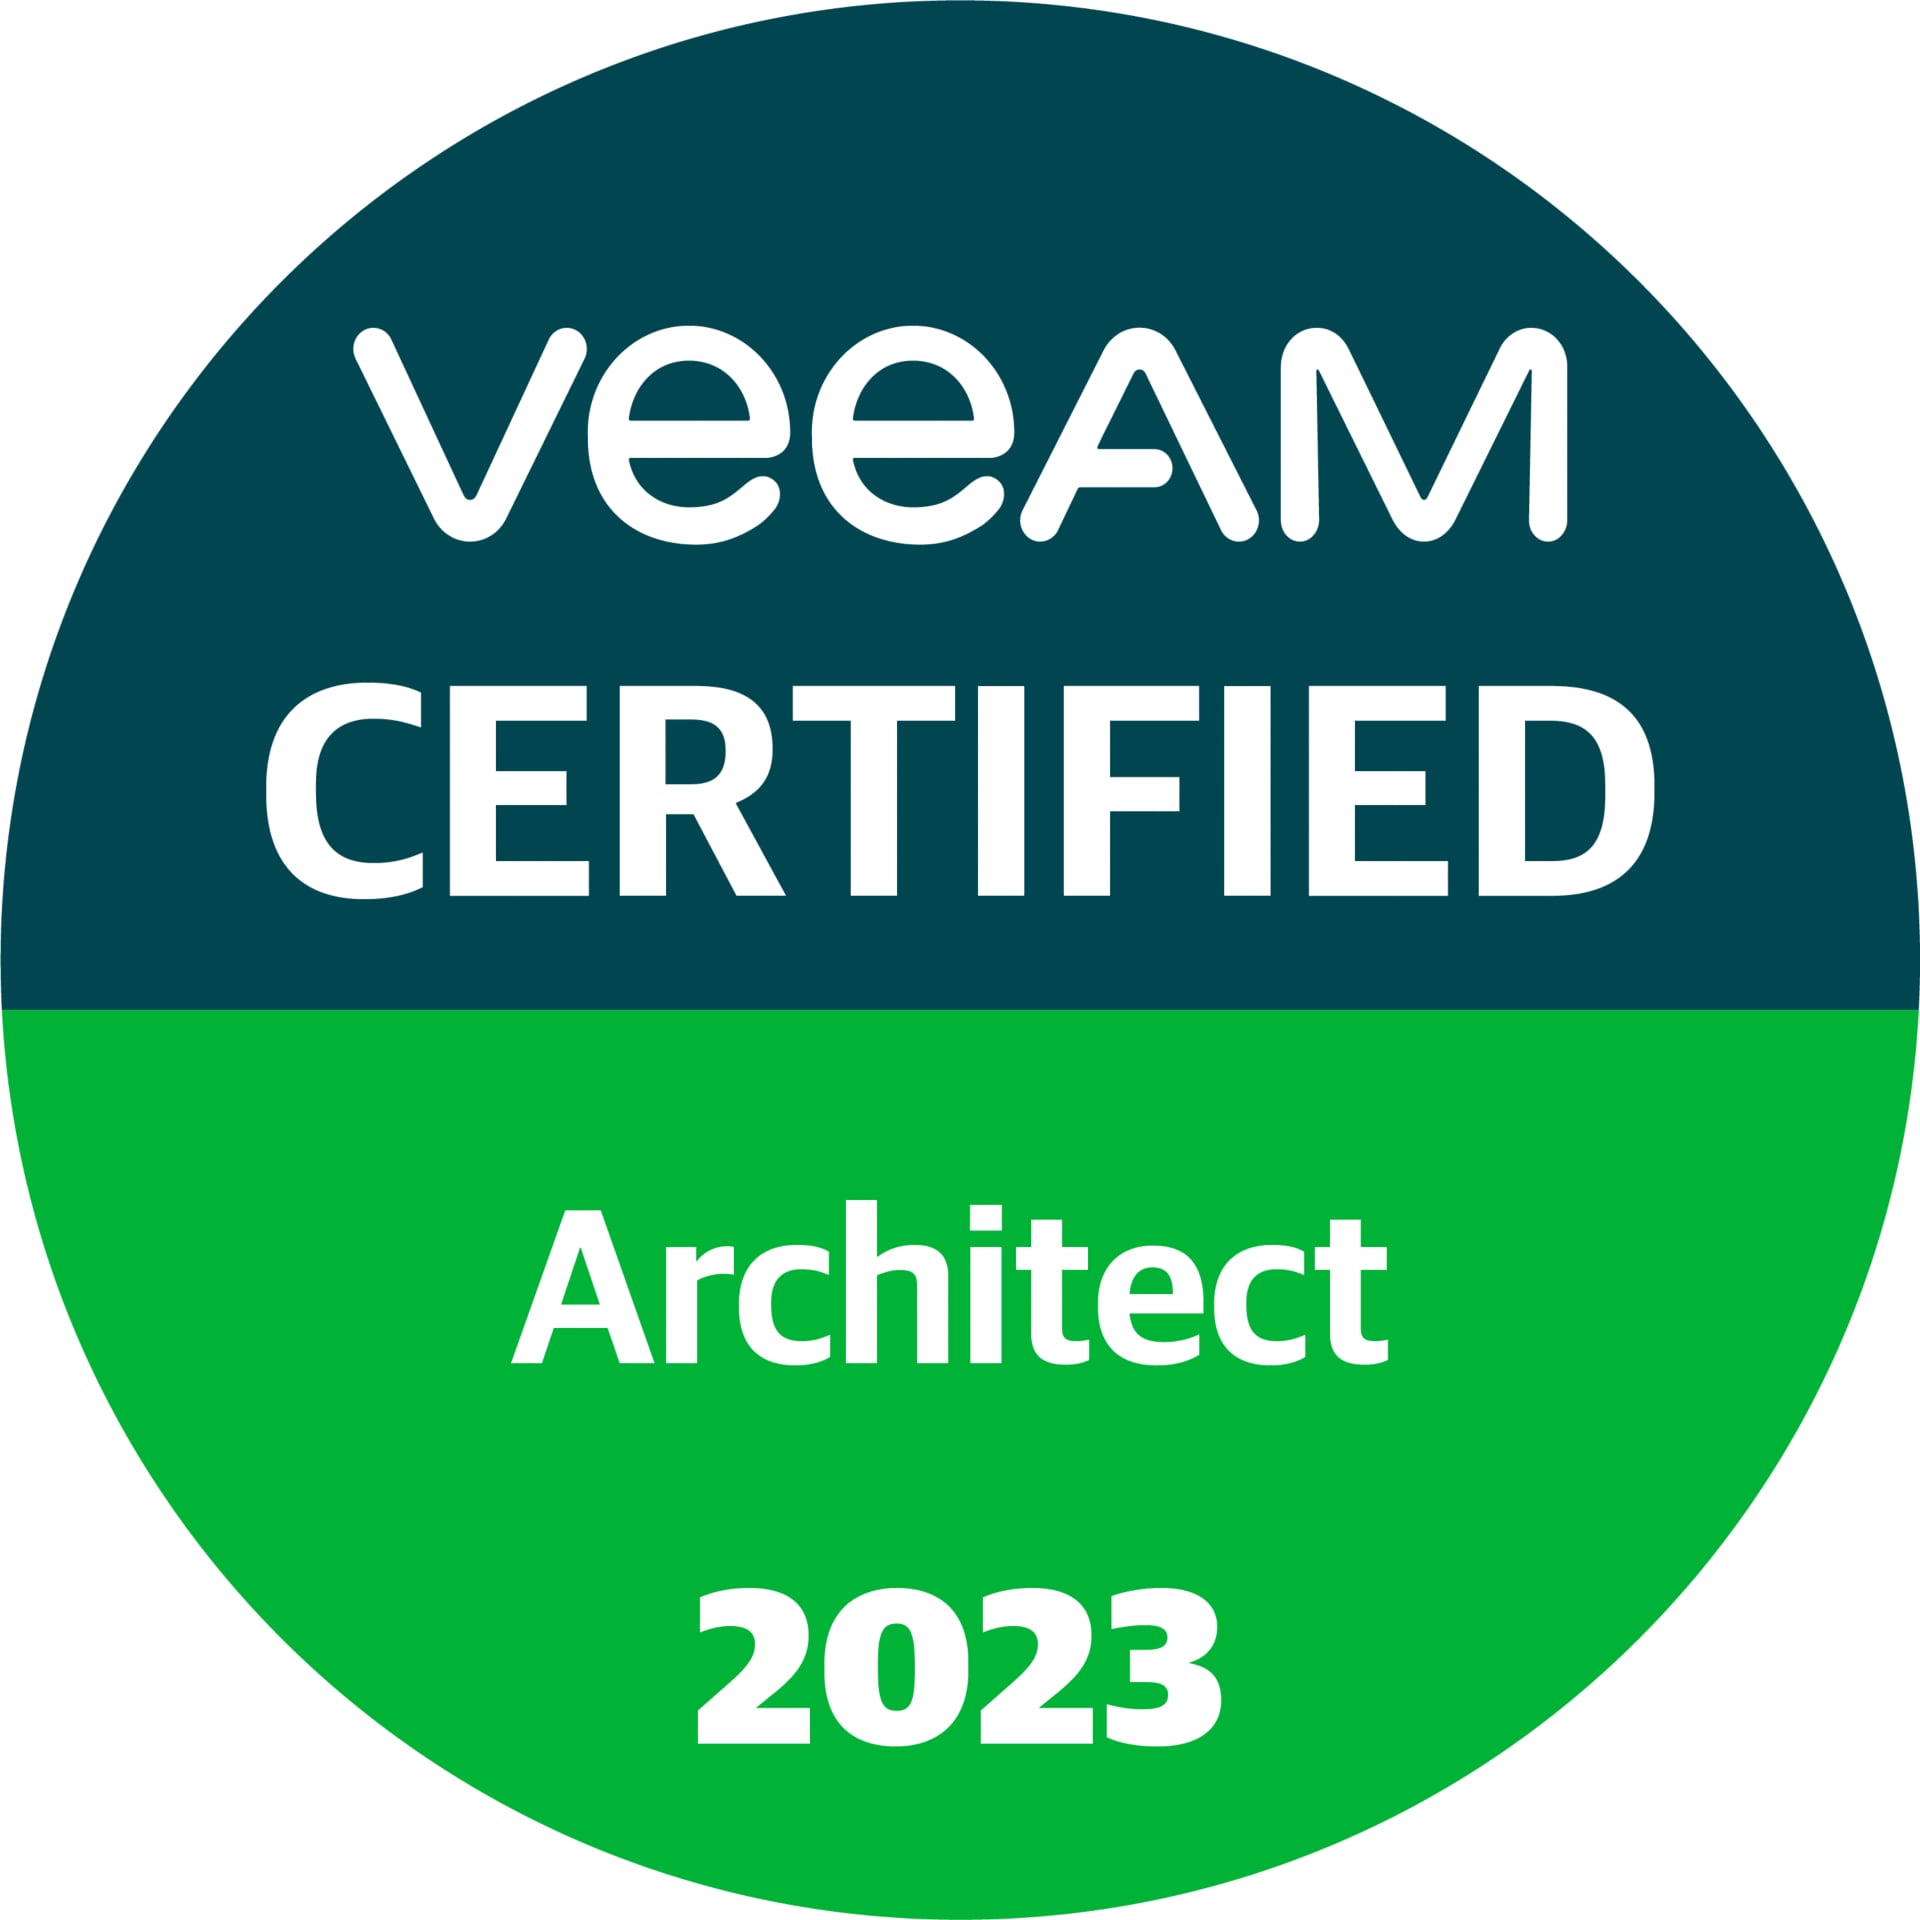 Veeam Certified Architect 2023